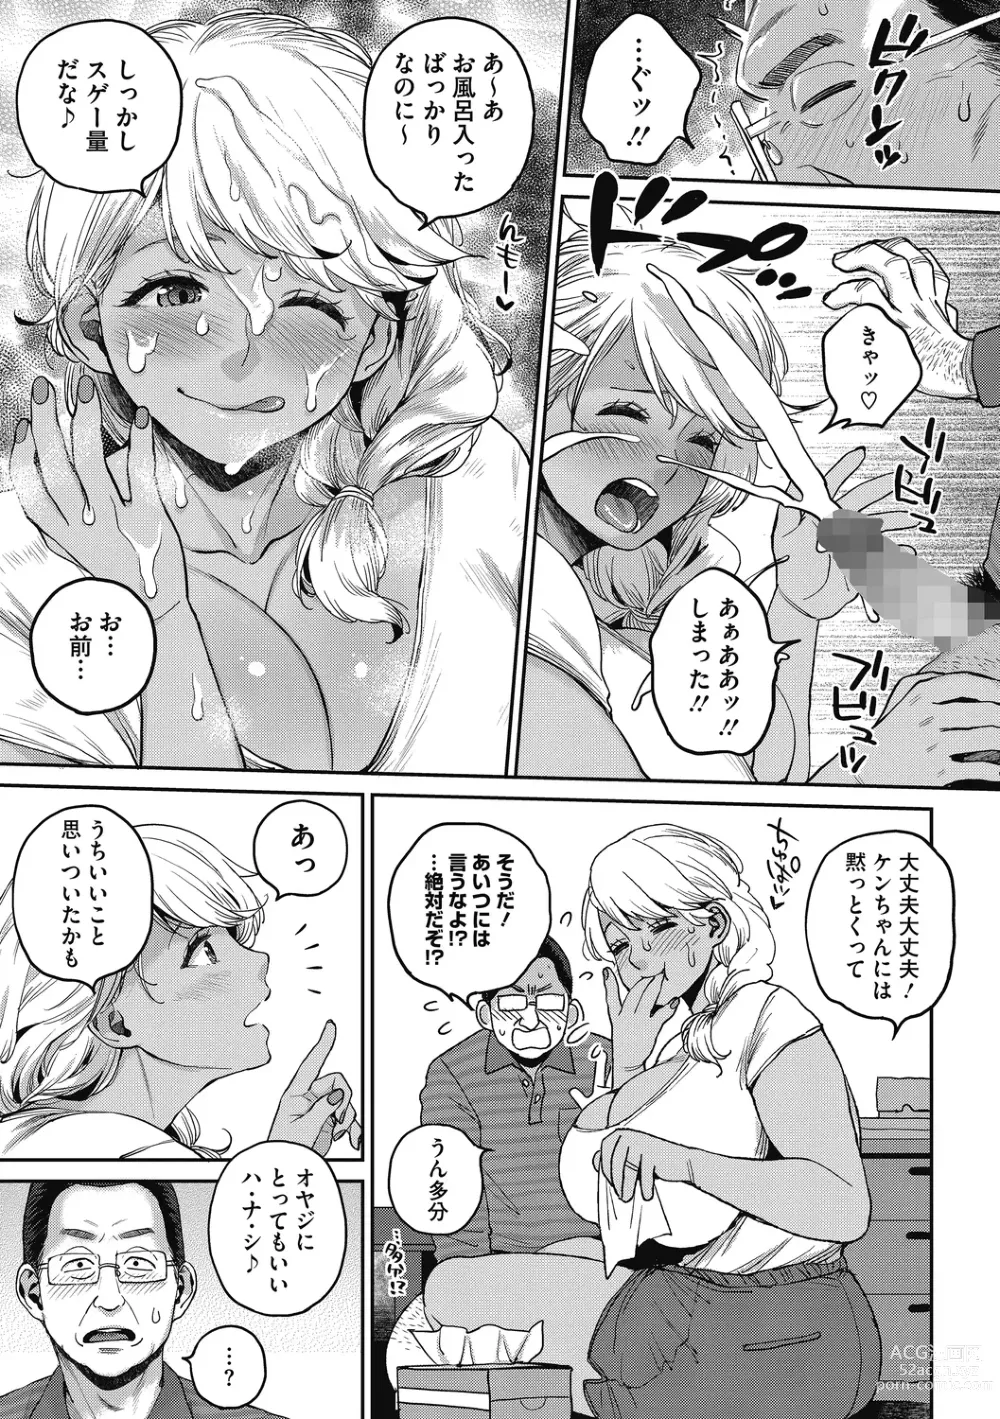 Page 9 of manga Nikudan gyaru yome, gifu (oyaji) o kuu